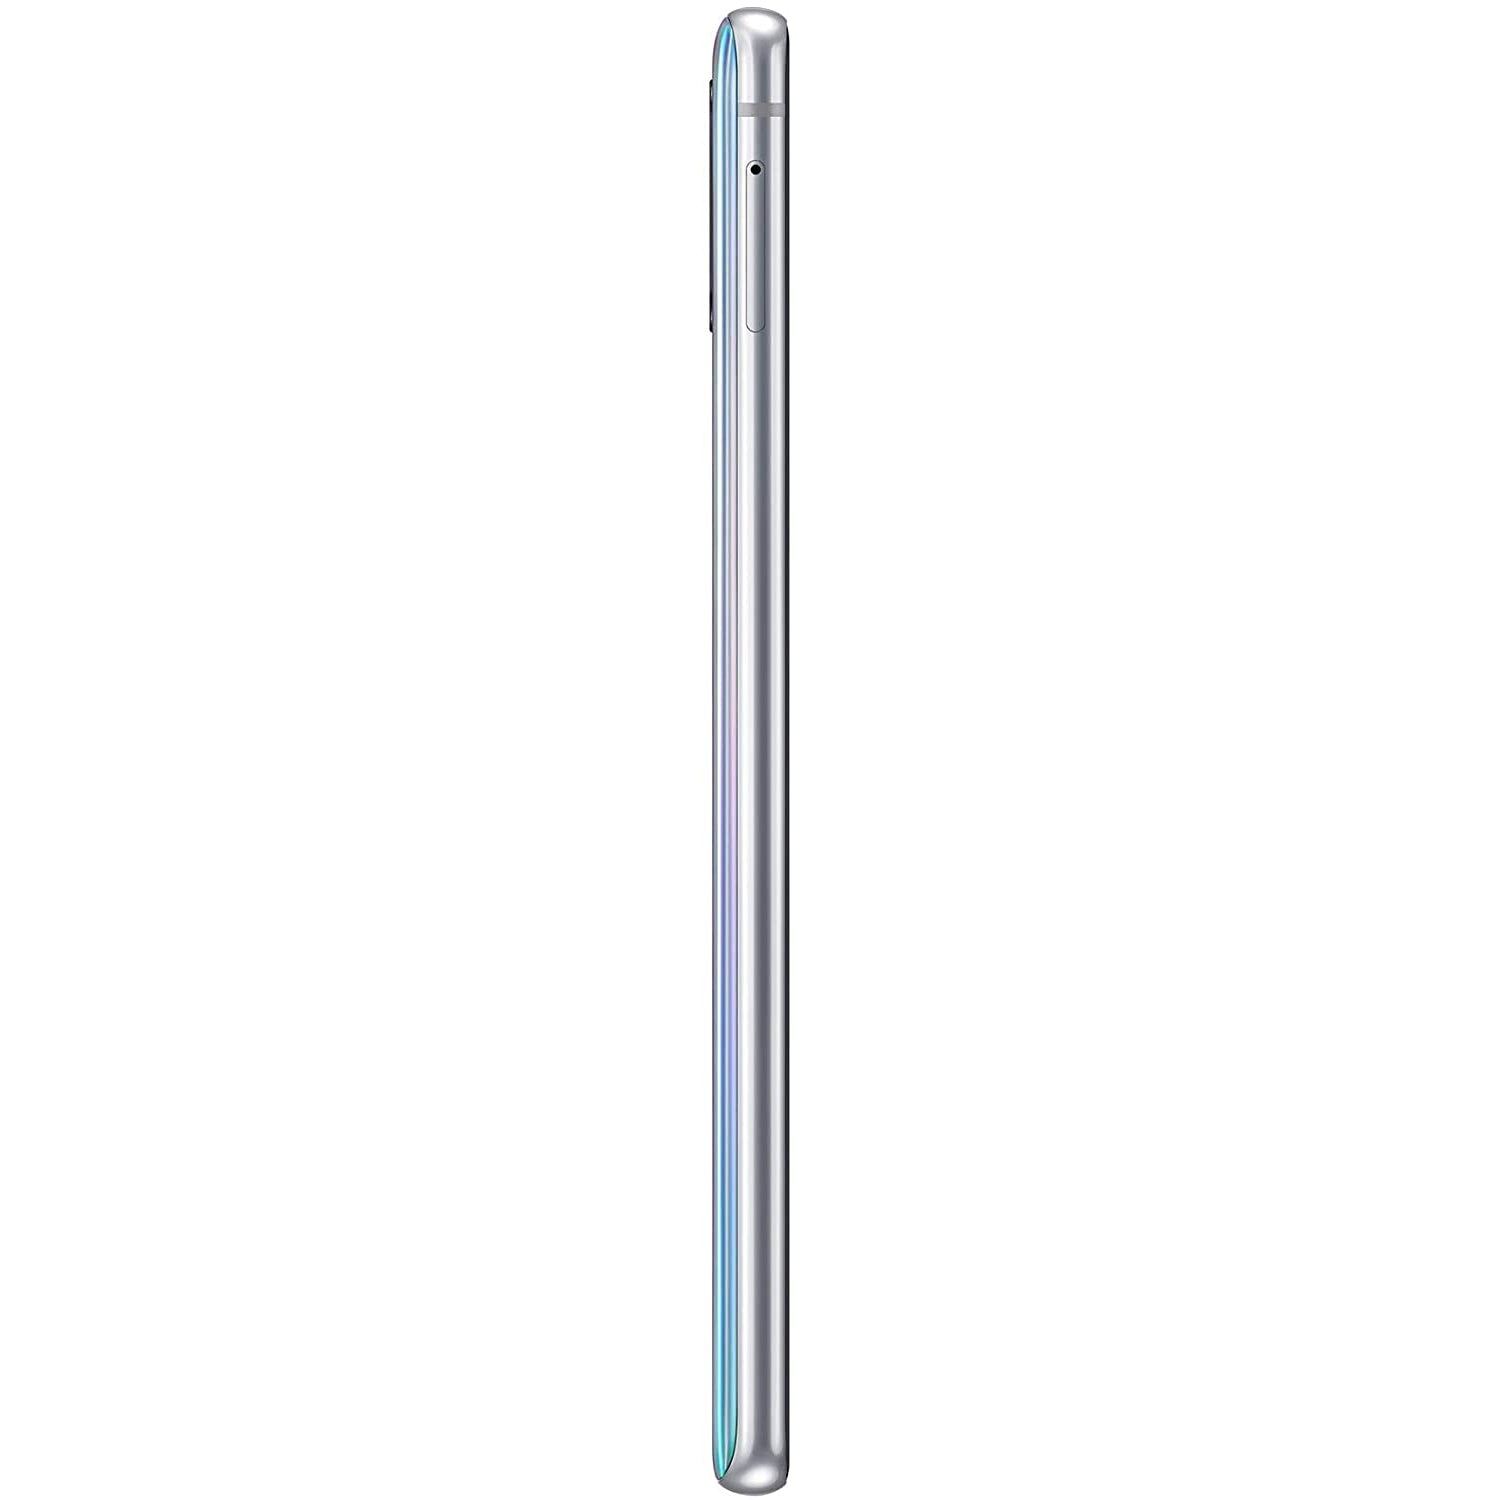 Samsung Galaxy Note 10 Lite Smartphone with S Pen, 6.7", SIM Free, 128GB, Silver